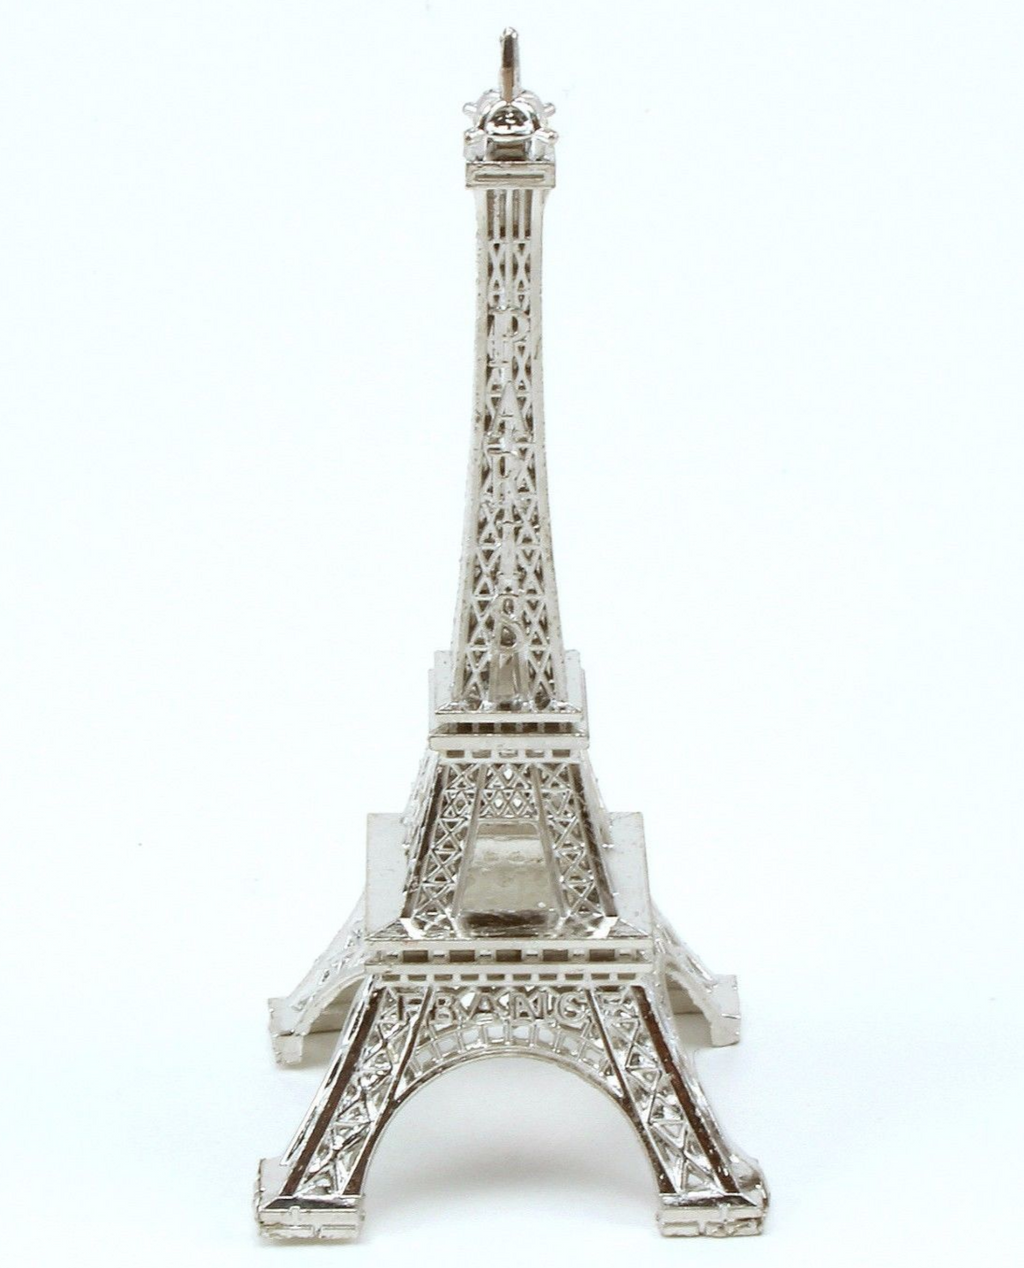 15 inch Silver Large Eiffel Tower Figurine 1 Piece - artcovecrafts.com